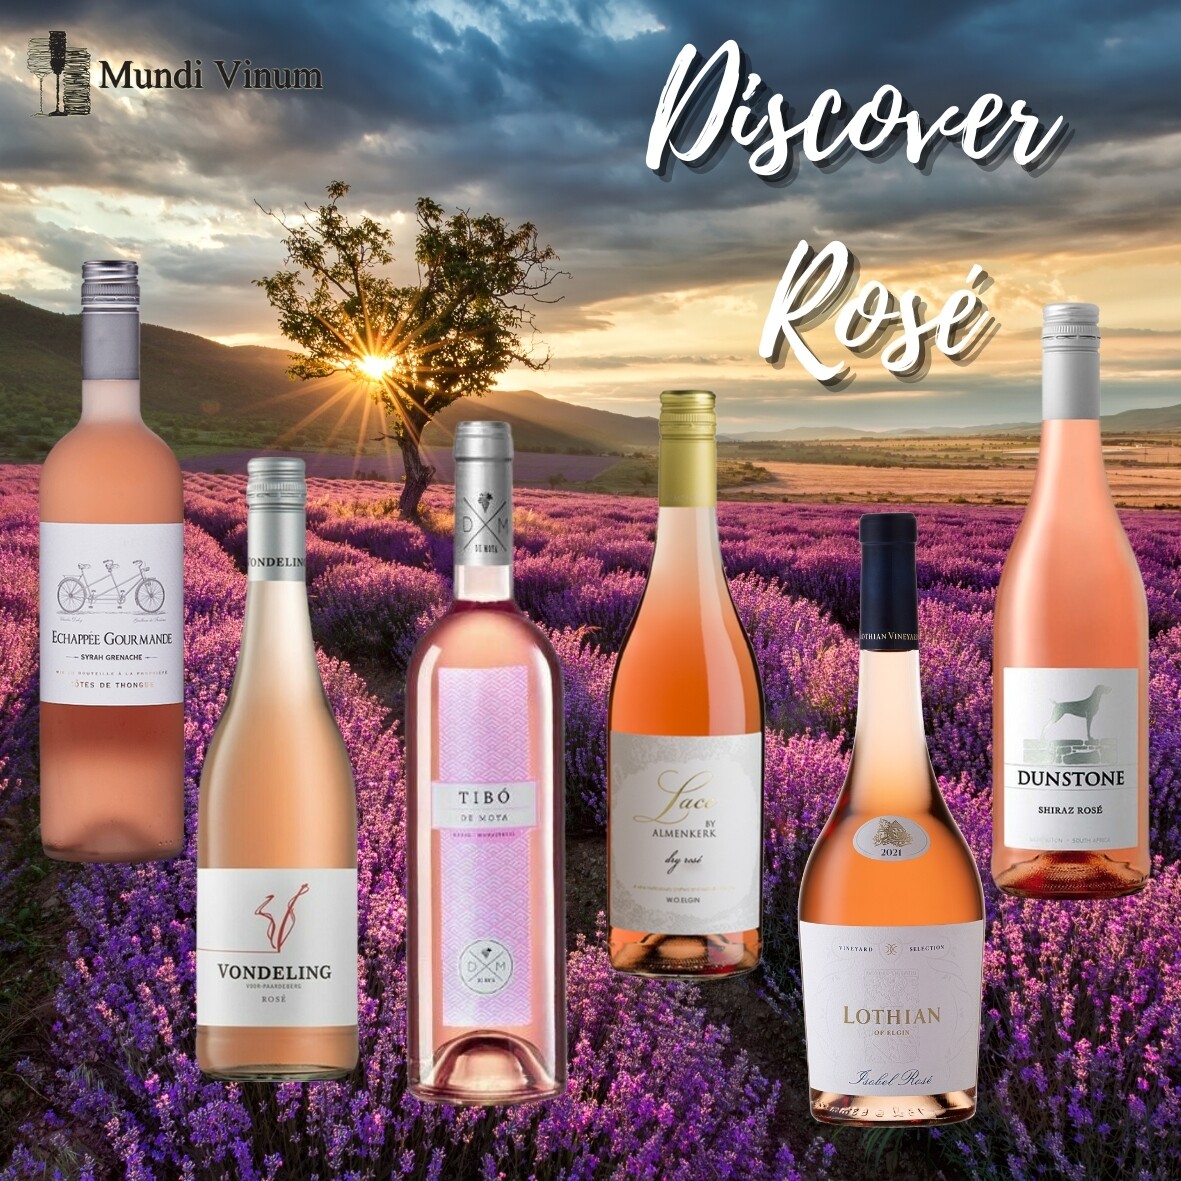 Proefpakket Discover rosé